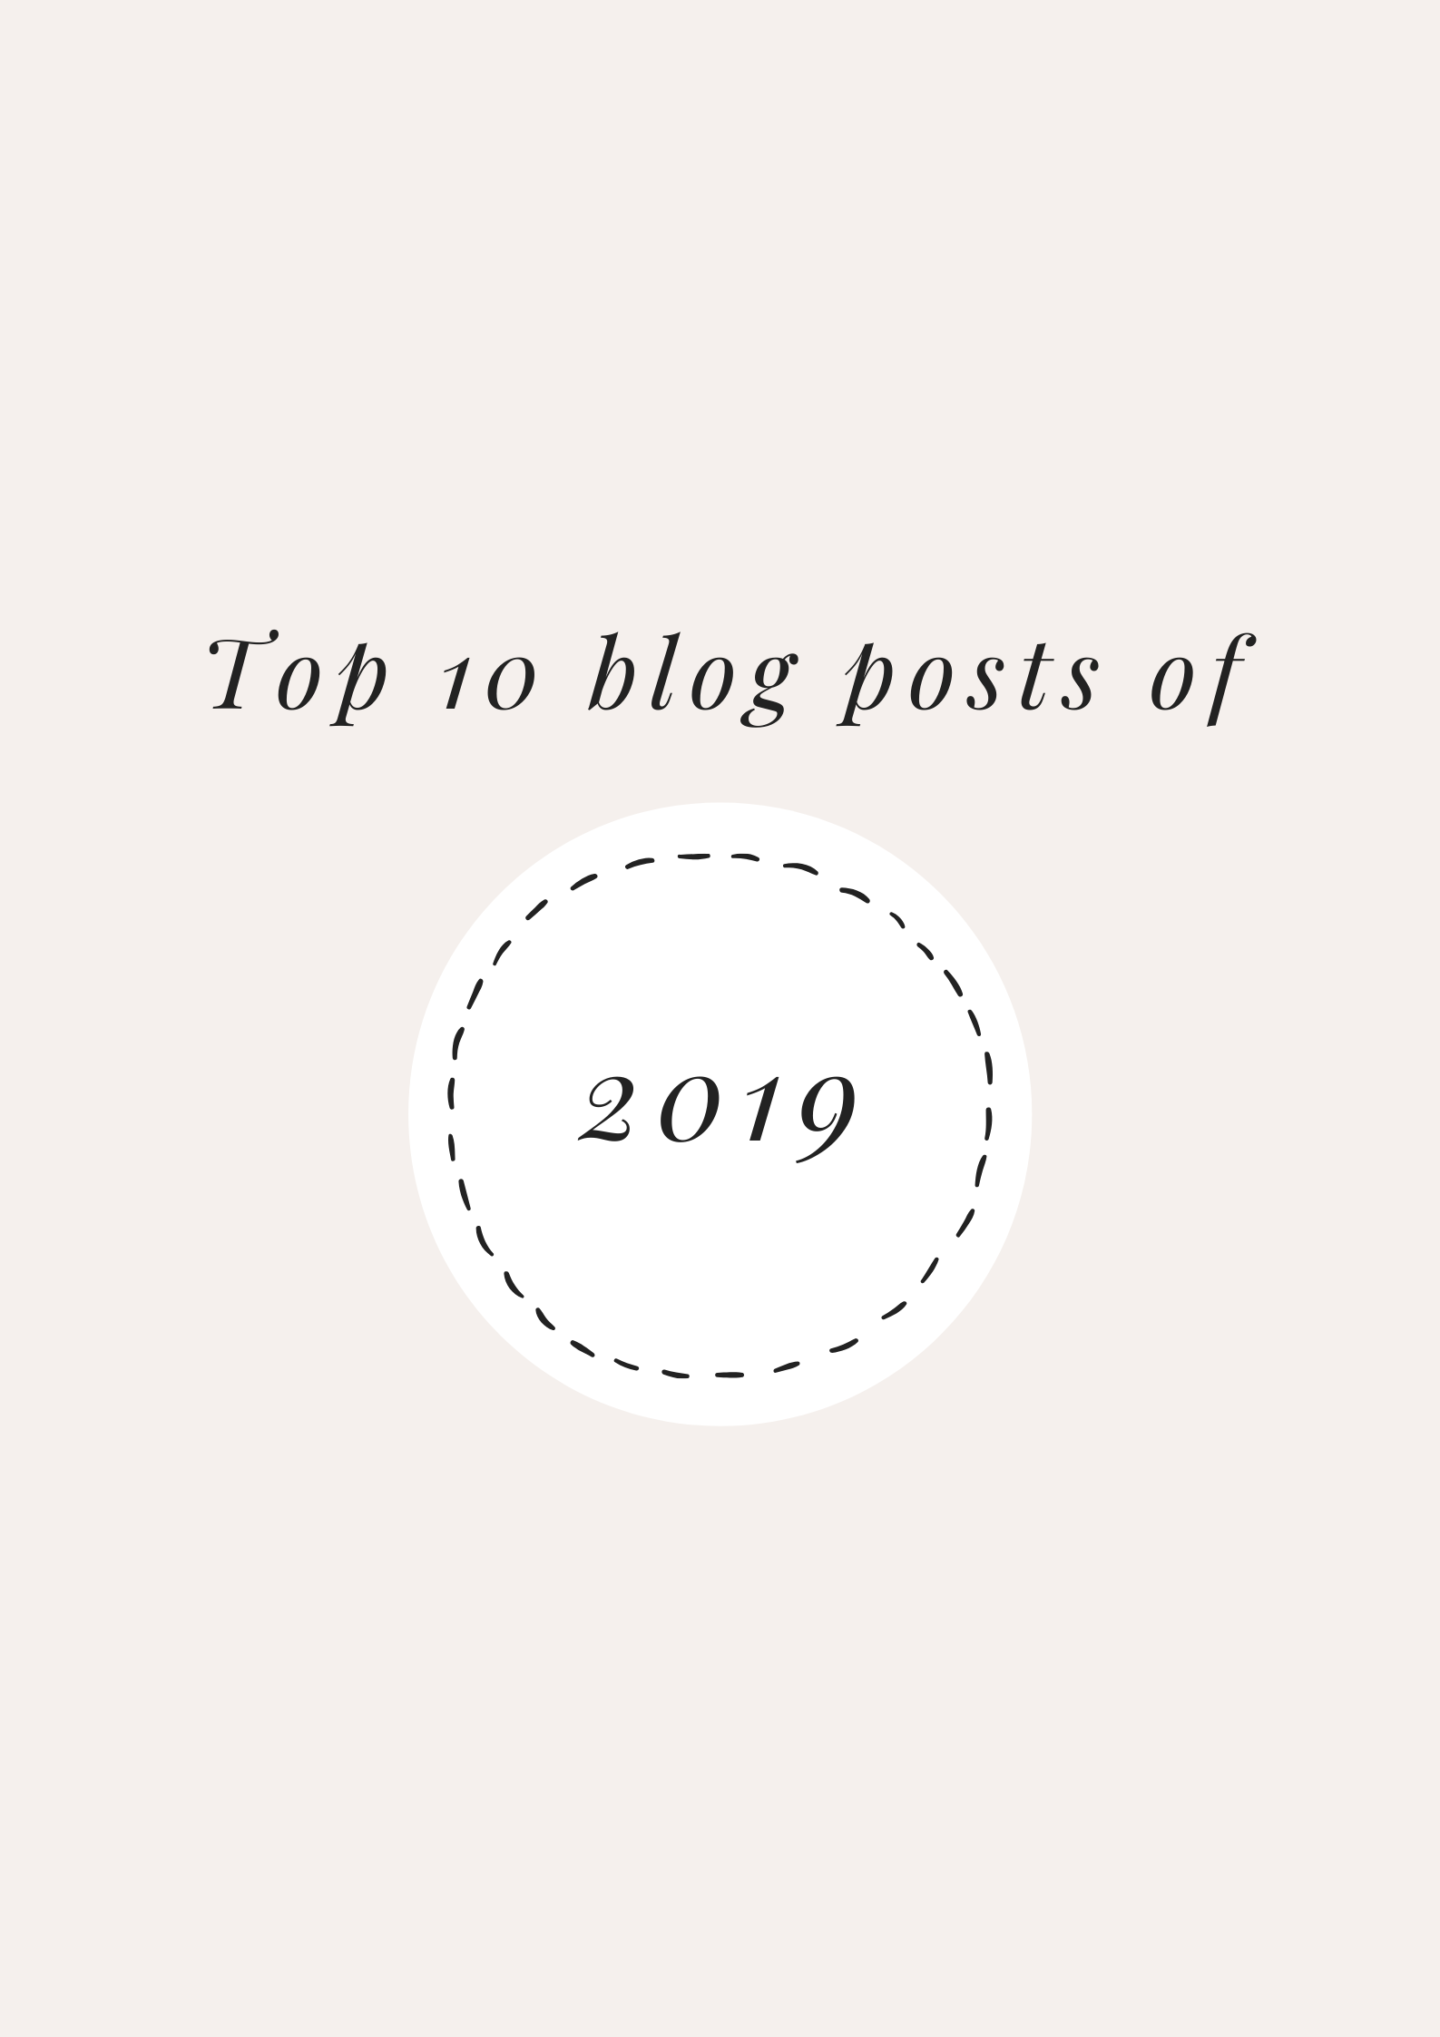 Top 10 blog posts of 2019